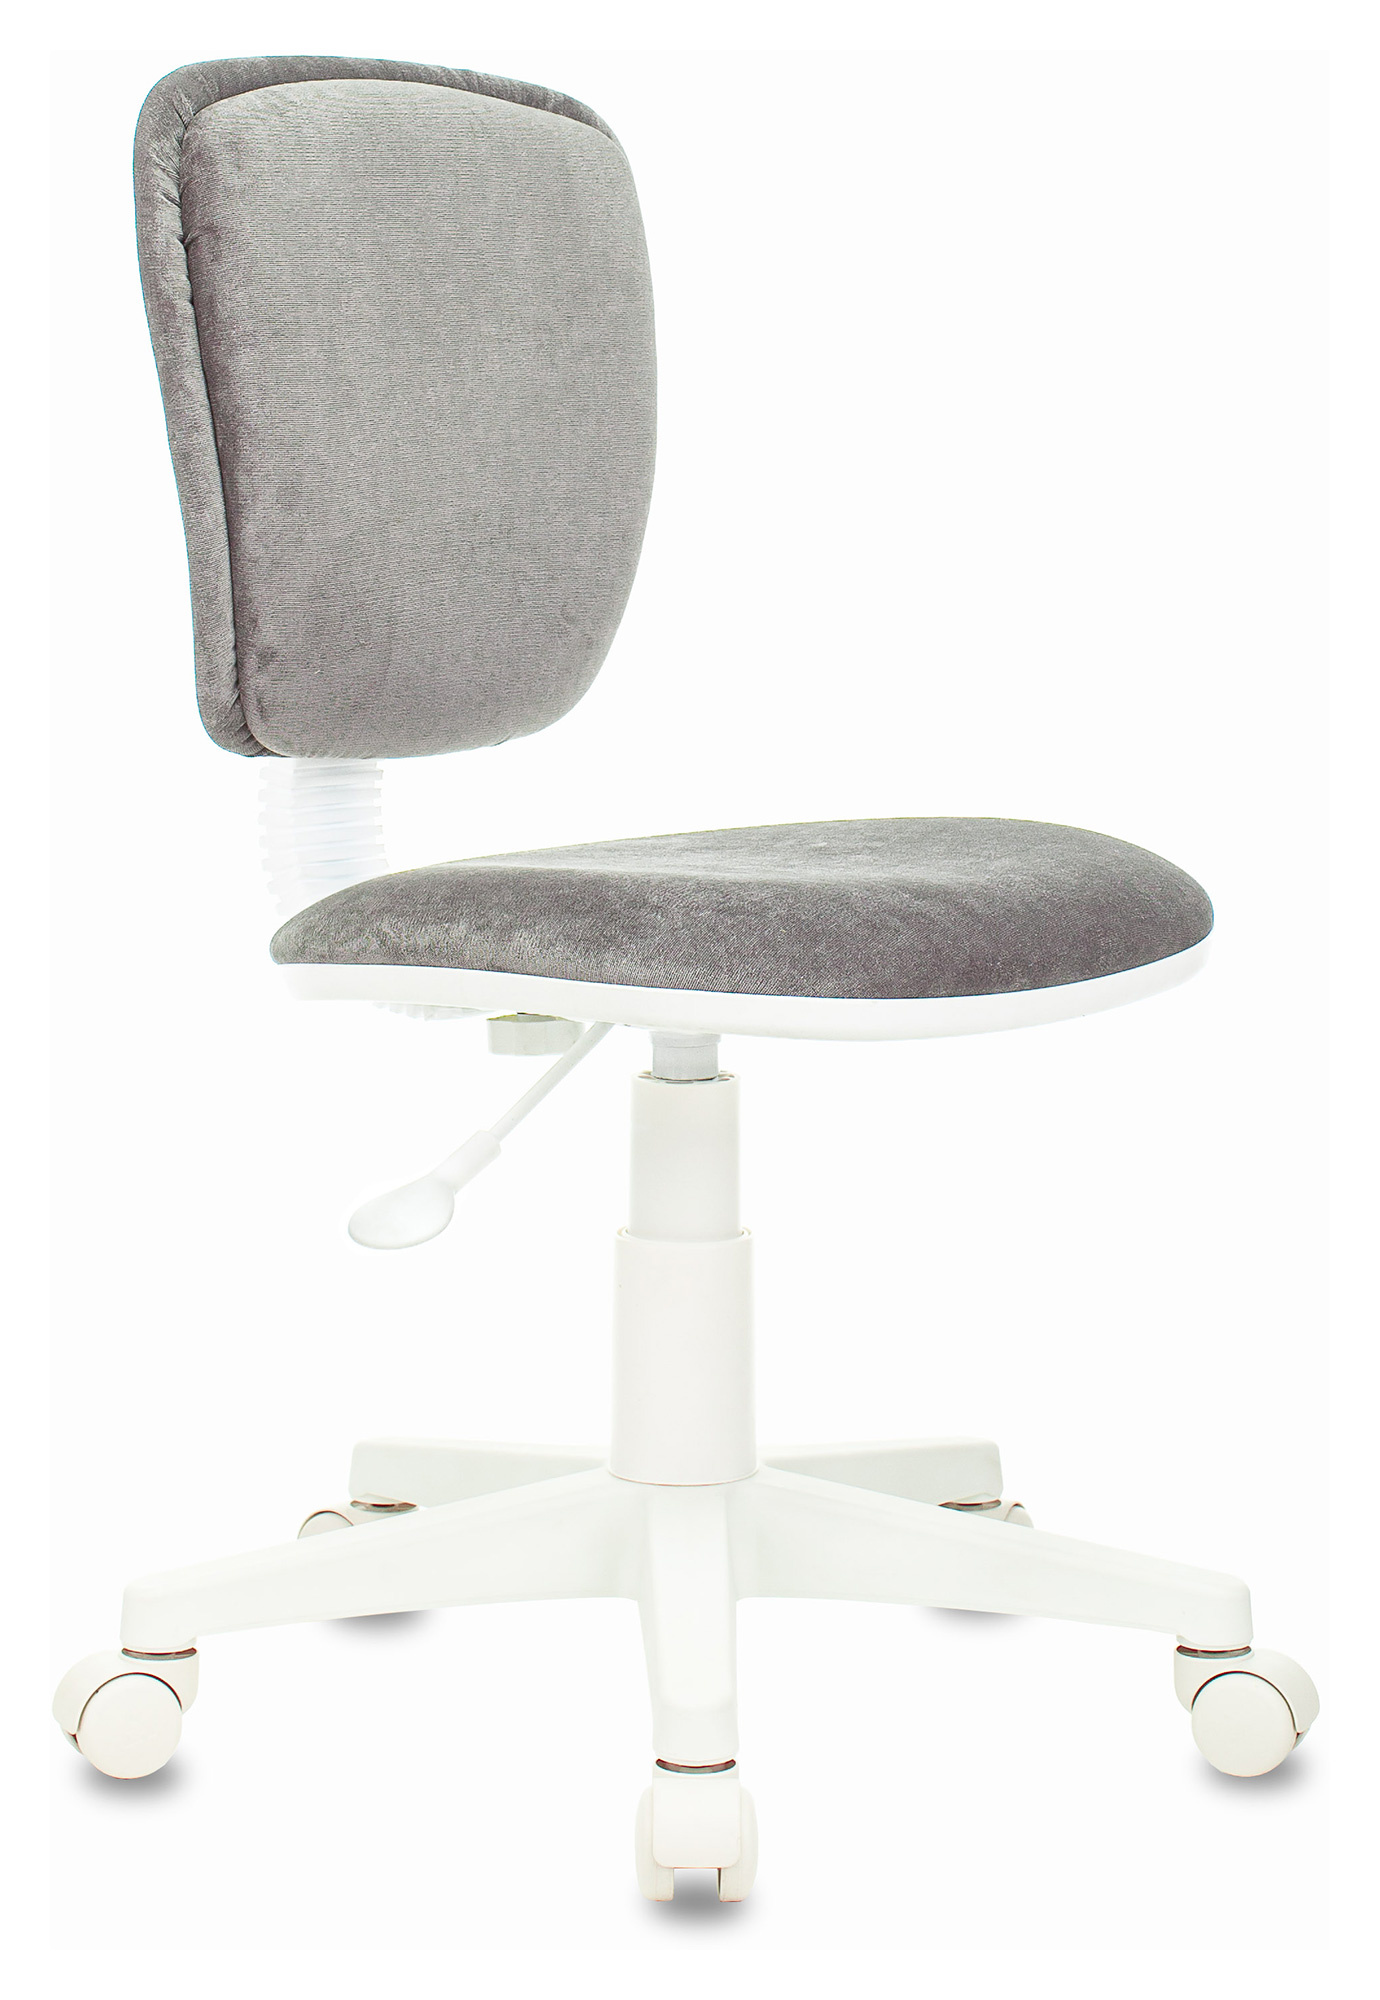 Кресло детское Бюрократ CH-W204NX, обивка: ткань, цвет: серый (CH-W204NX/LT19) от магазина Buro.store